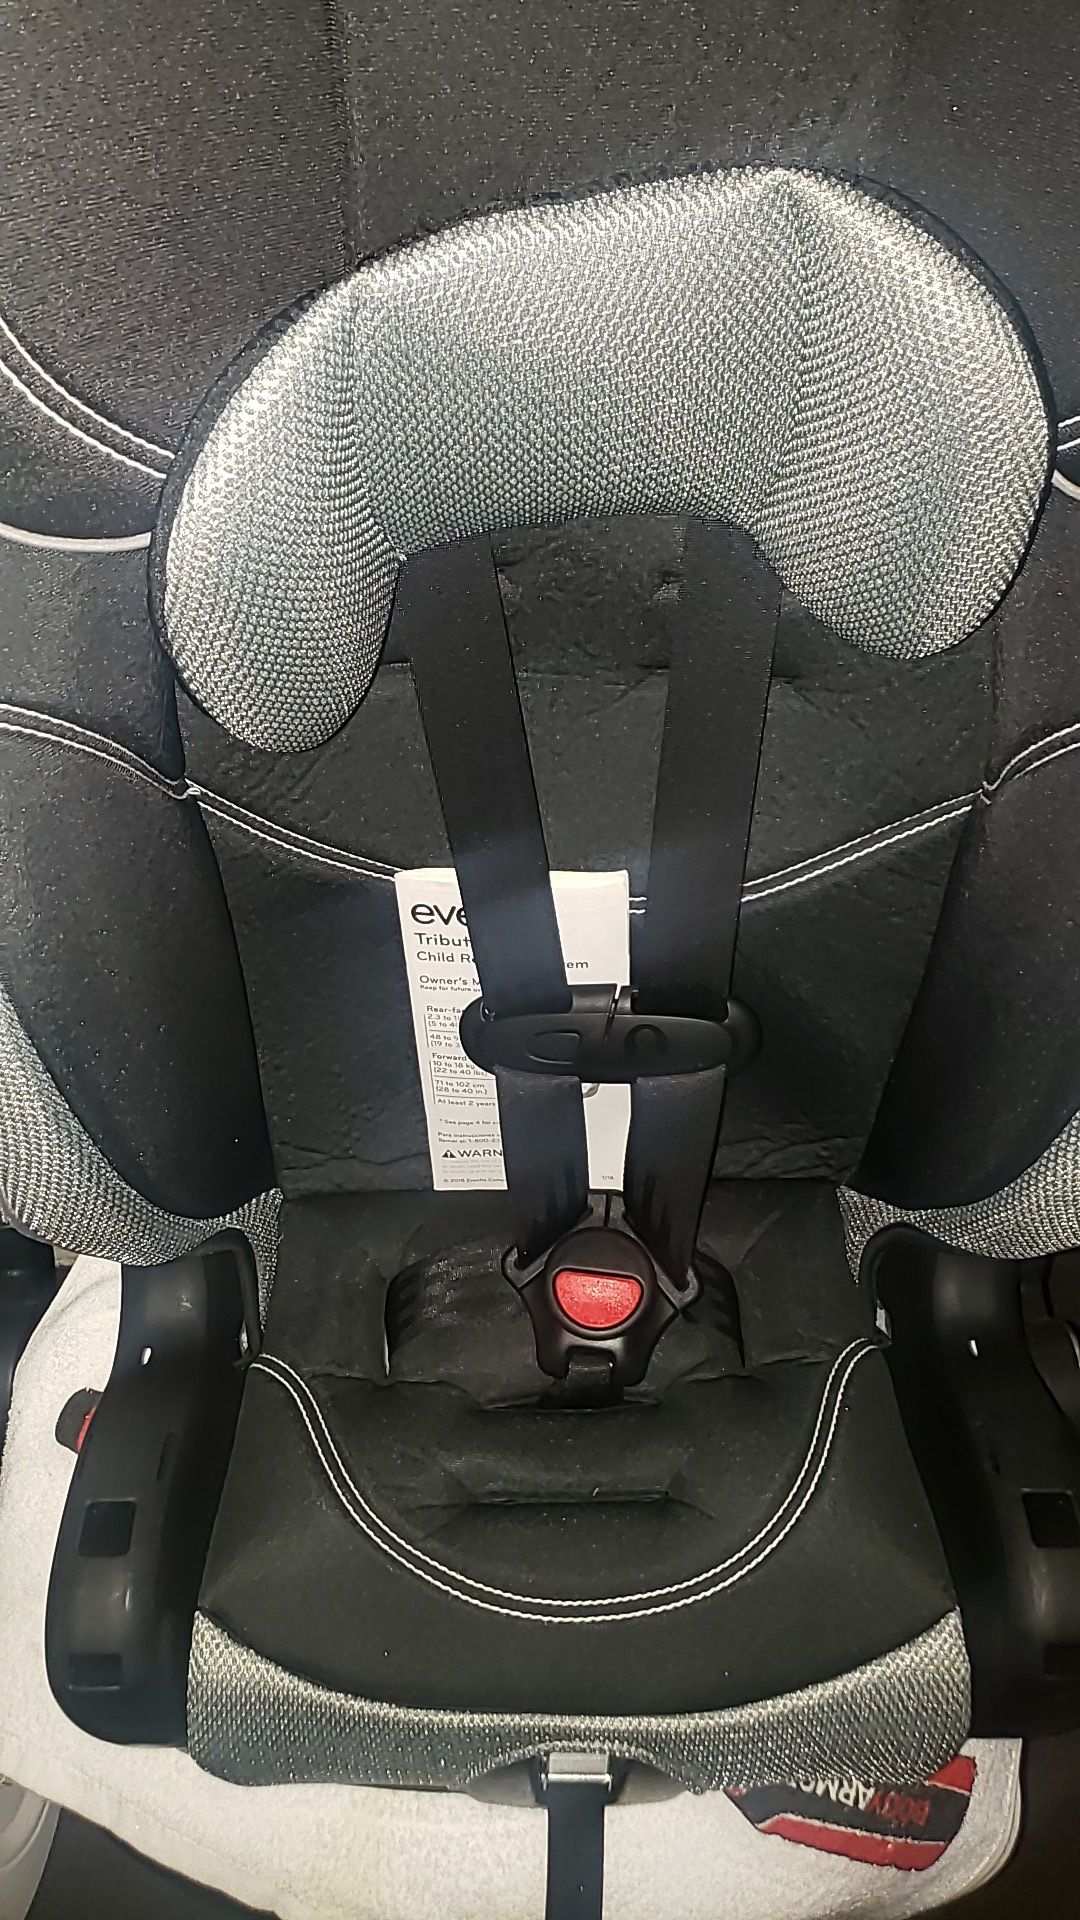 Car seat evenflo como nuevo